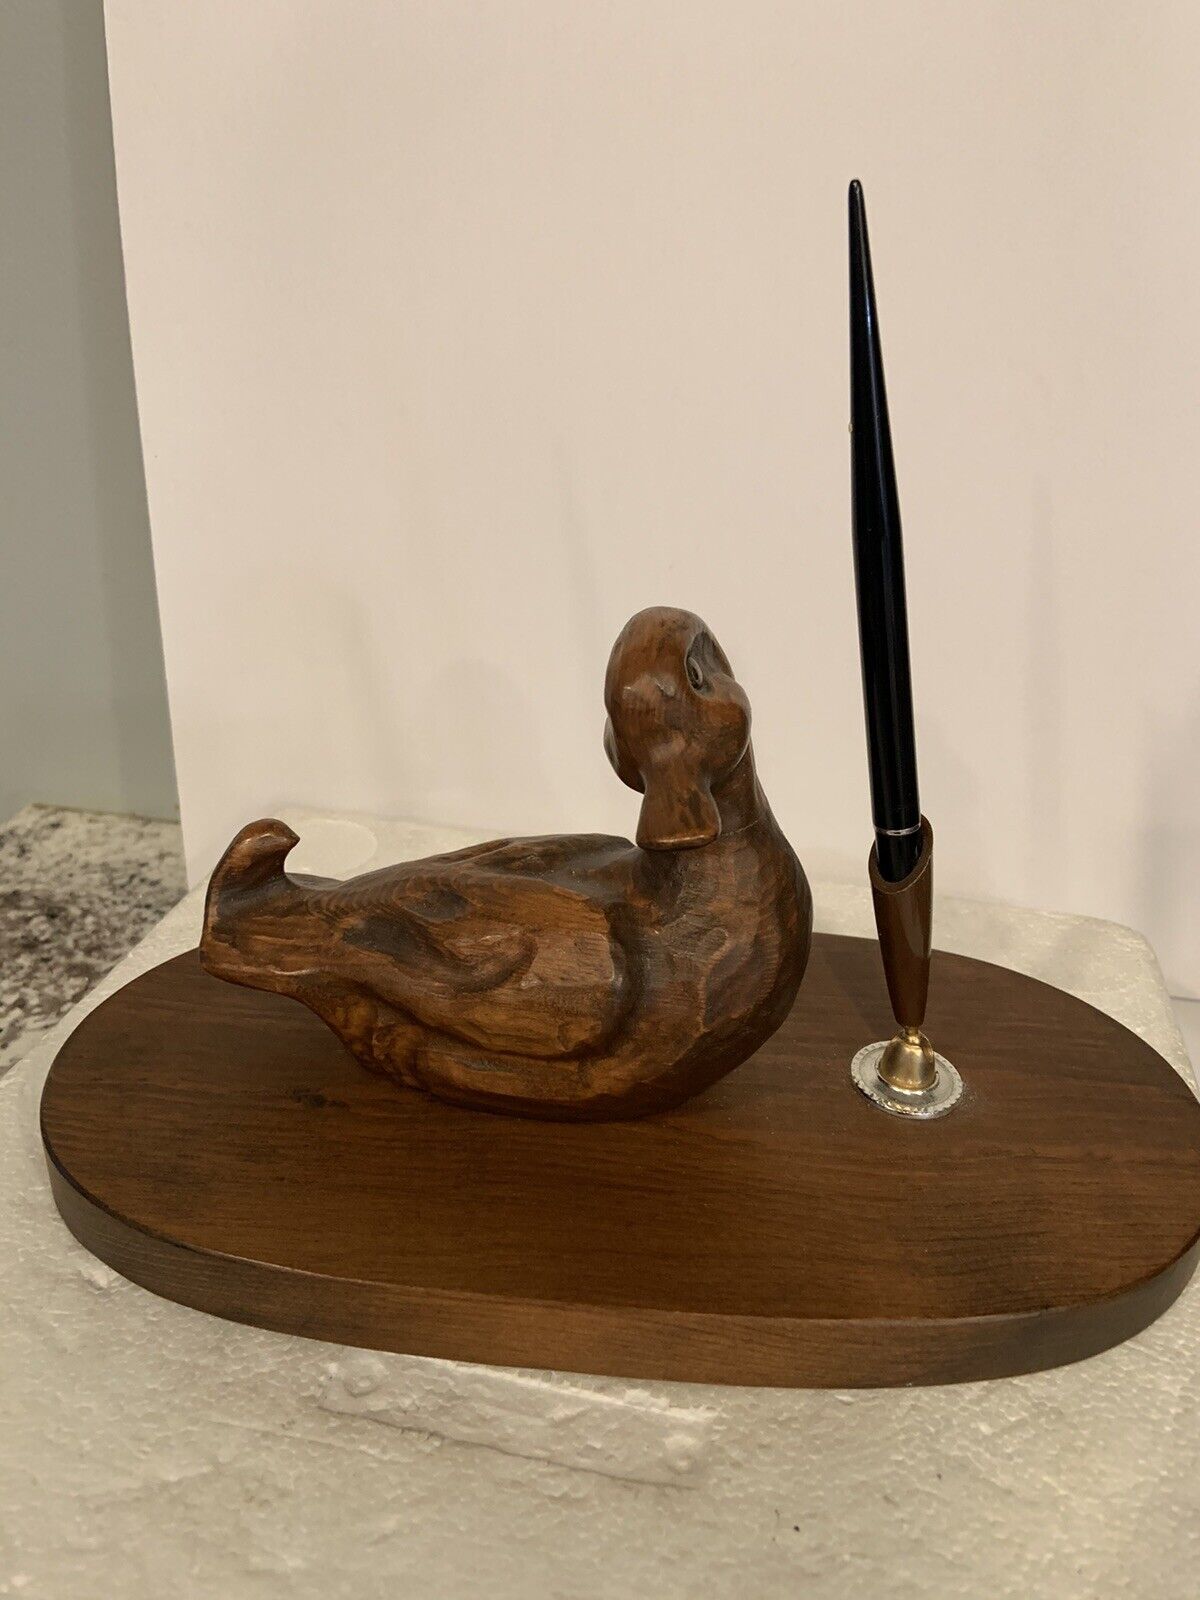 Vtg Hand Carved Wooden Duck Desk Pen Holder By Alt Weisskopf German Artist W/Pen